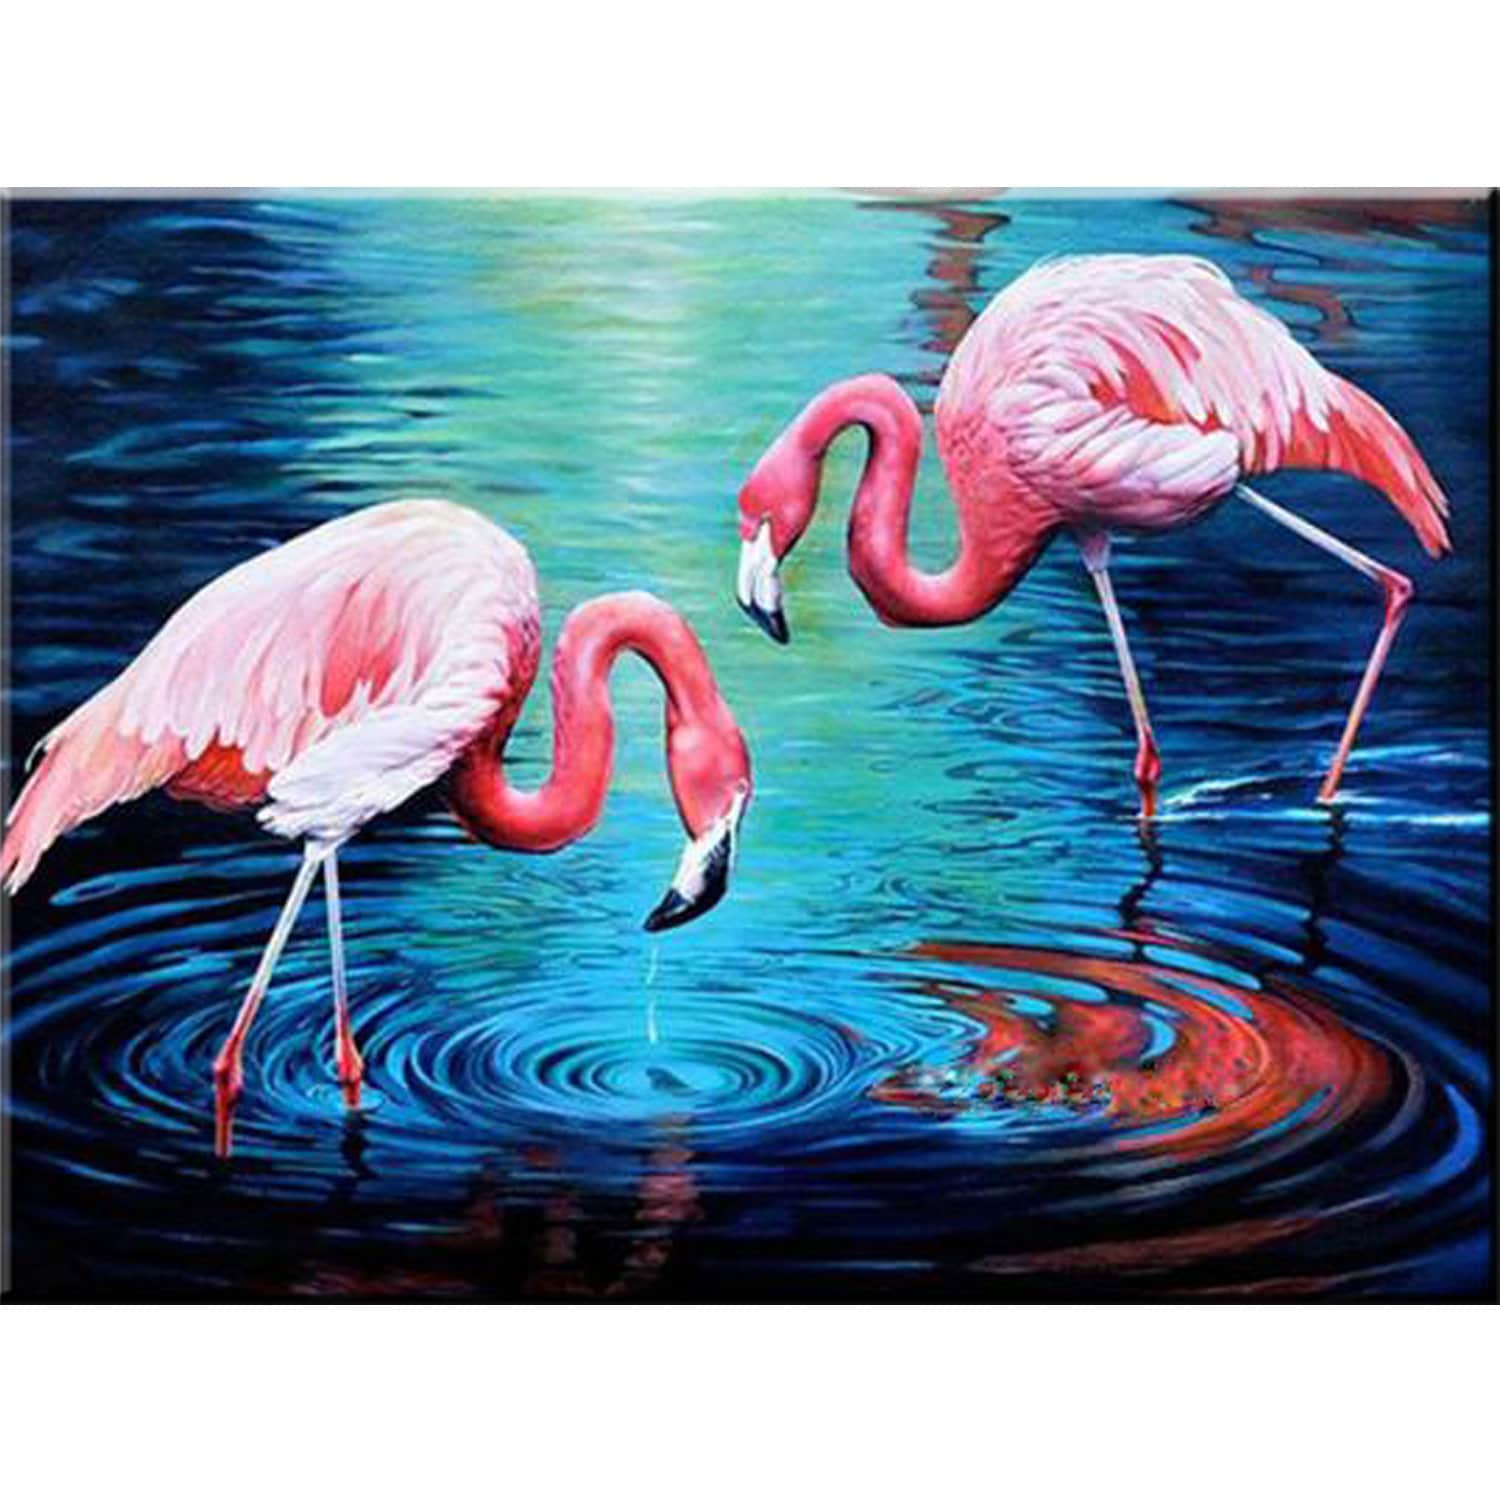 5D Full Drill Diamond Painting Flamingo Cross Stitch Craft Embroidery Wall Decor